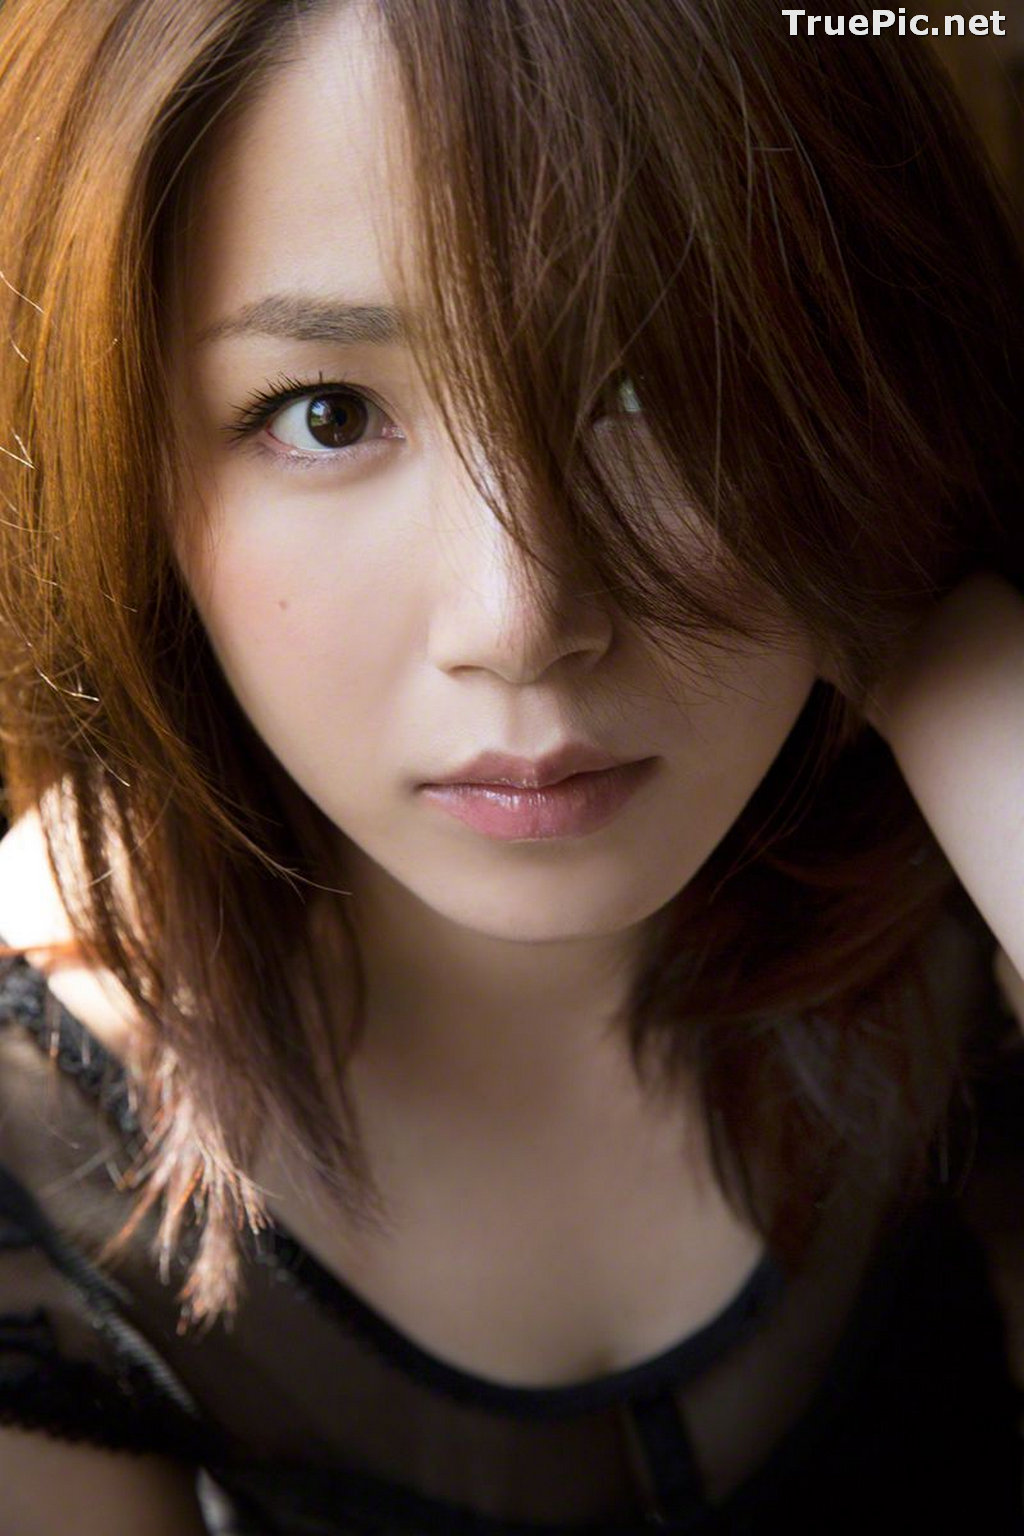 Image [Wanibooks Jacket] No.129 - Japanese Singer and Actress - You Kikkawa - TruePic.net - Picture-30